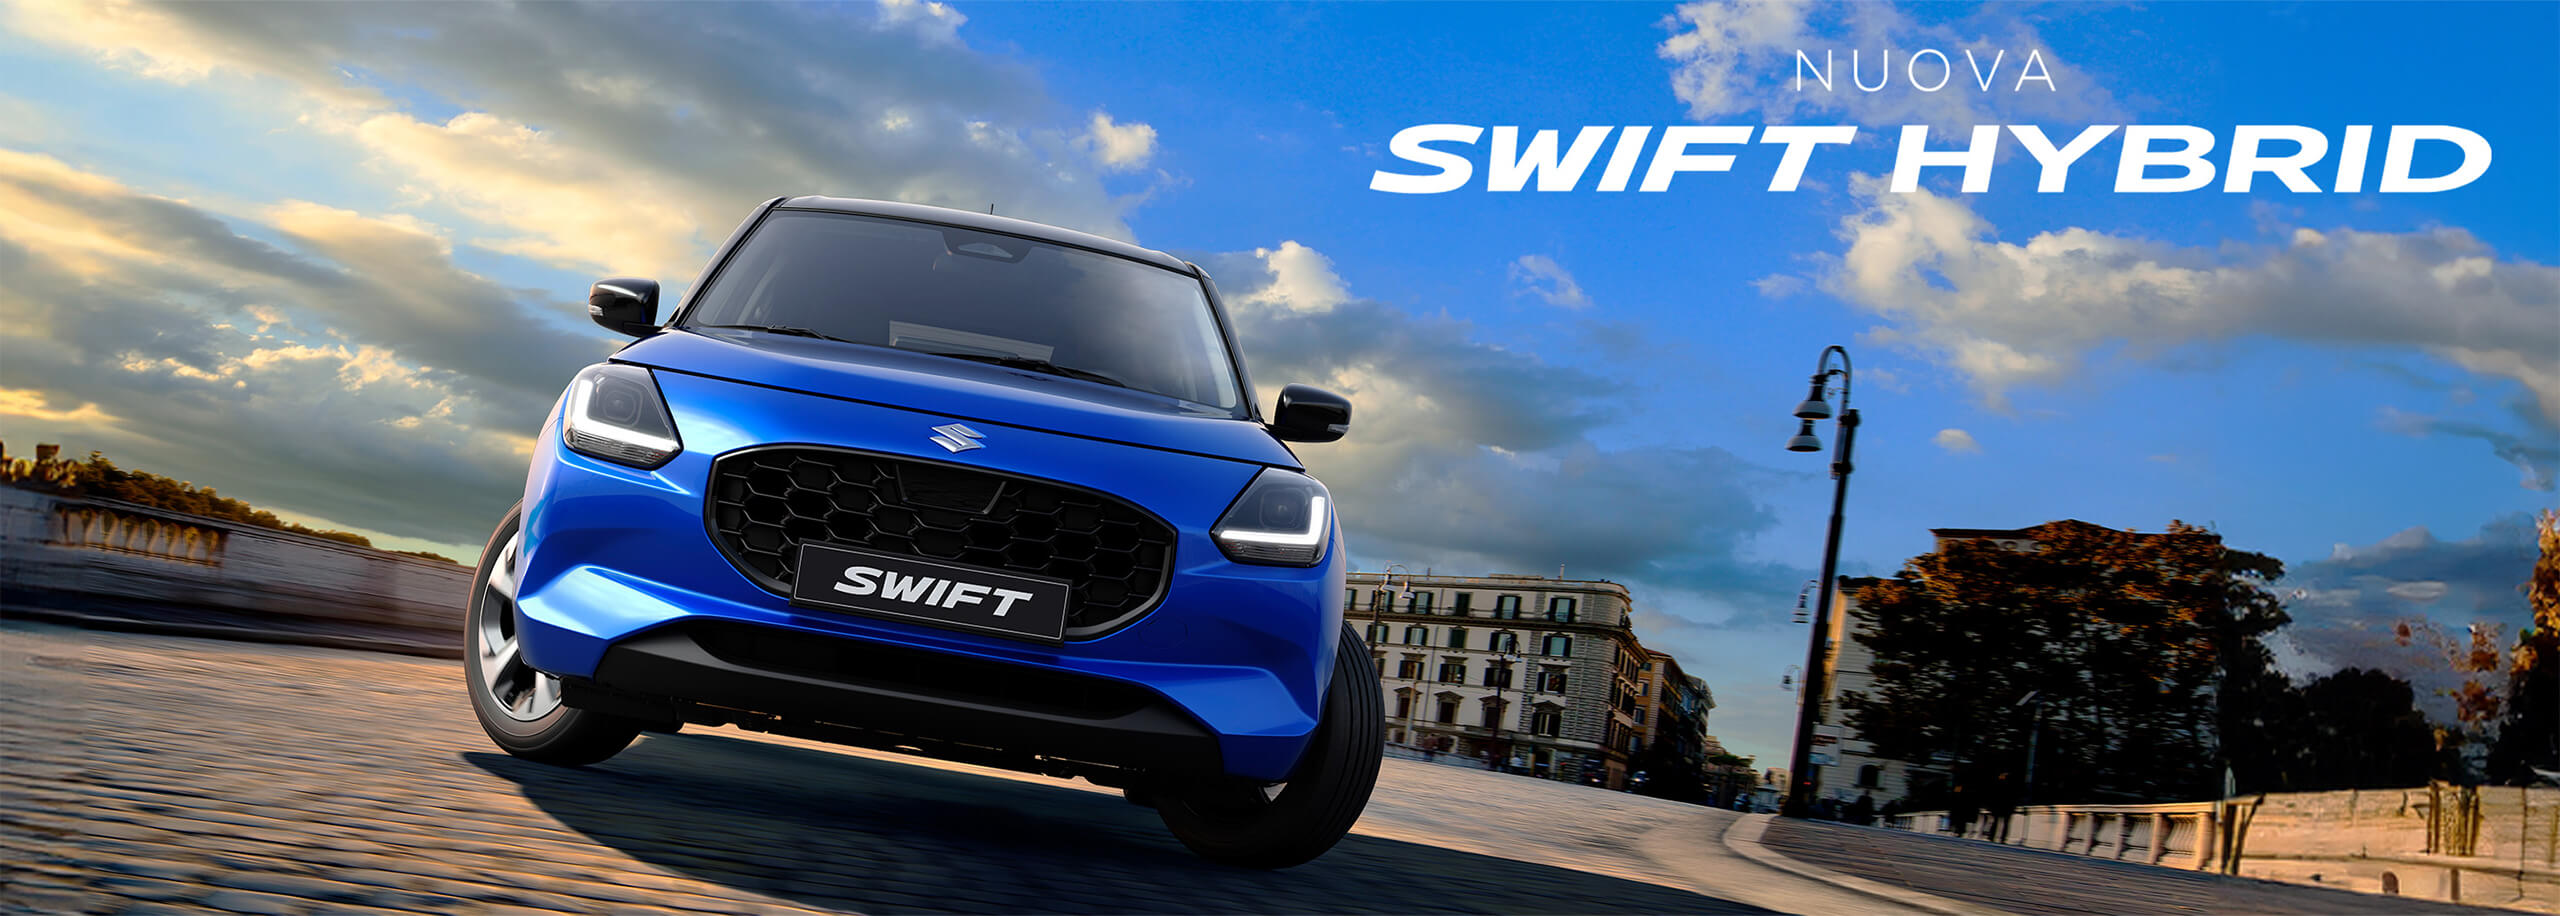 promozione nuova swift hybrid